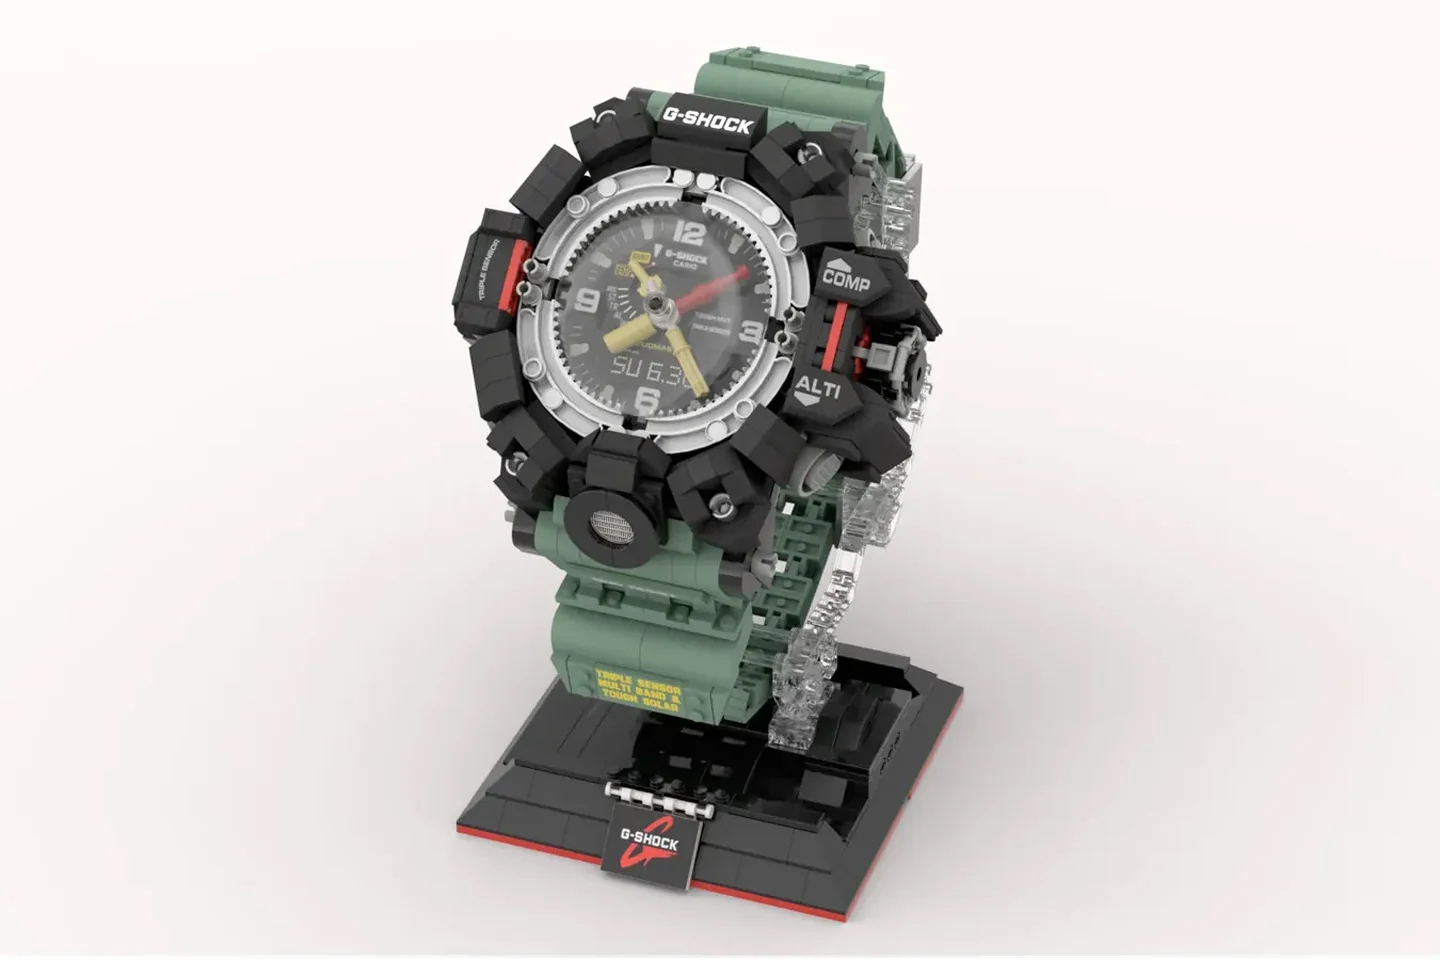 Lego G-Shock Mudmaster concept